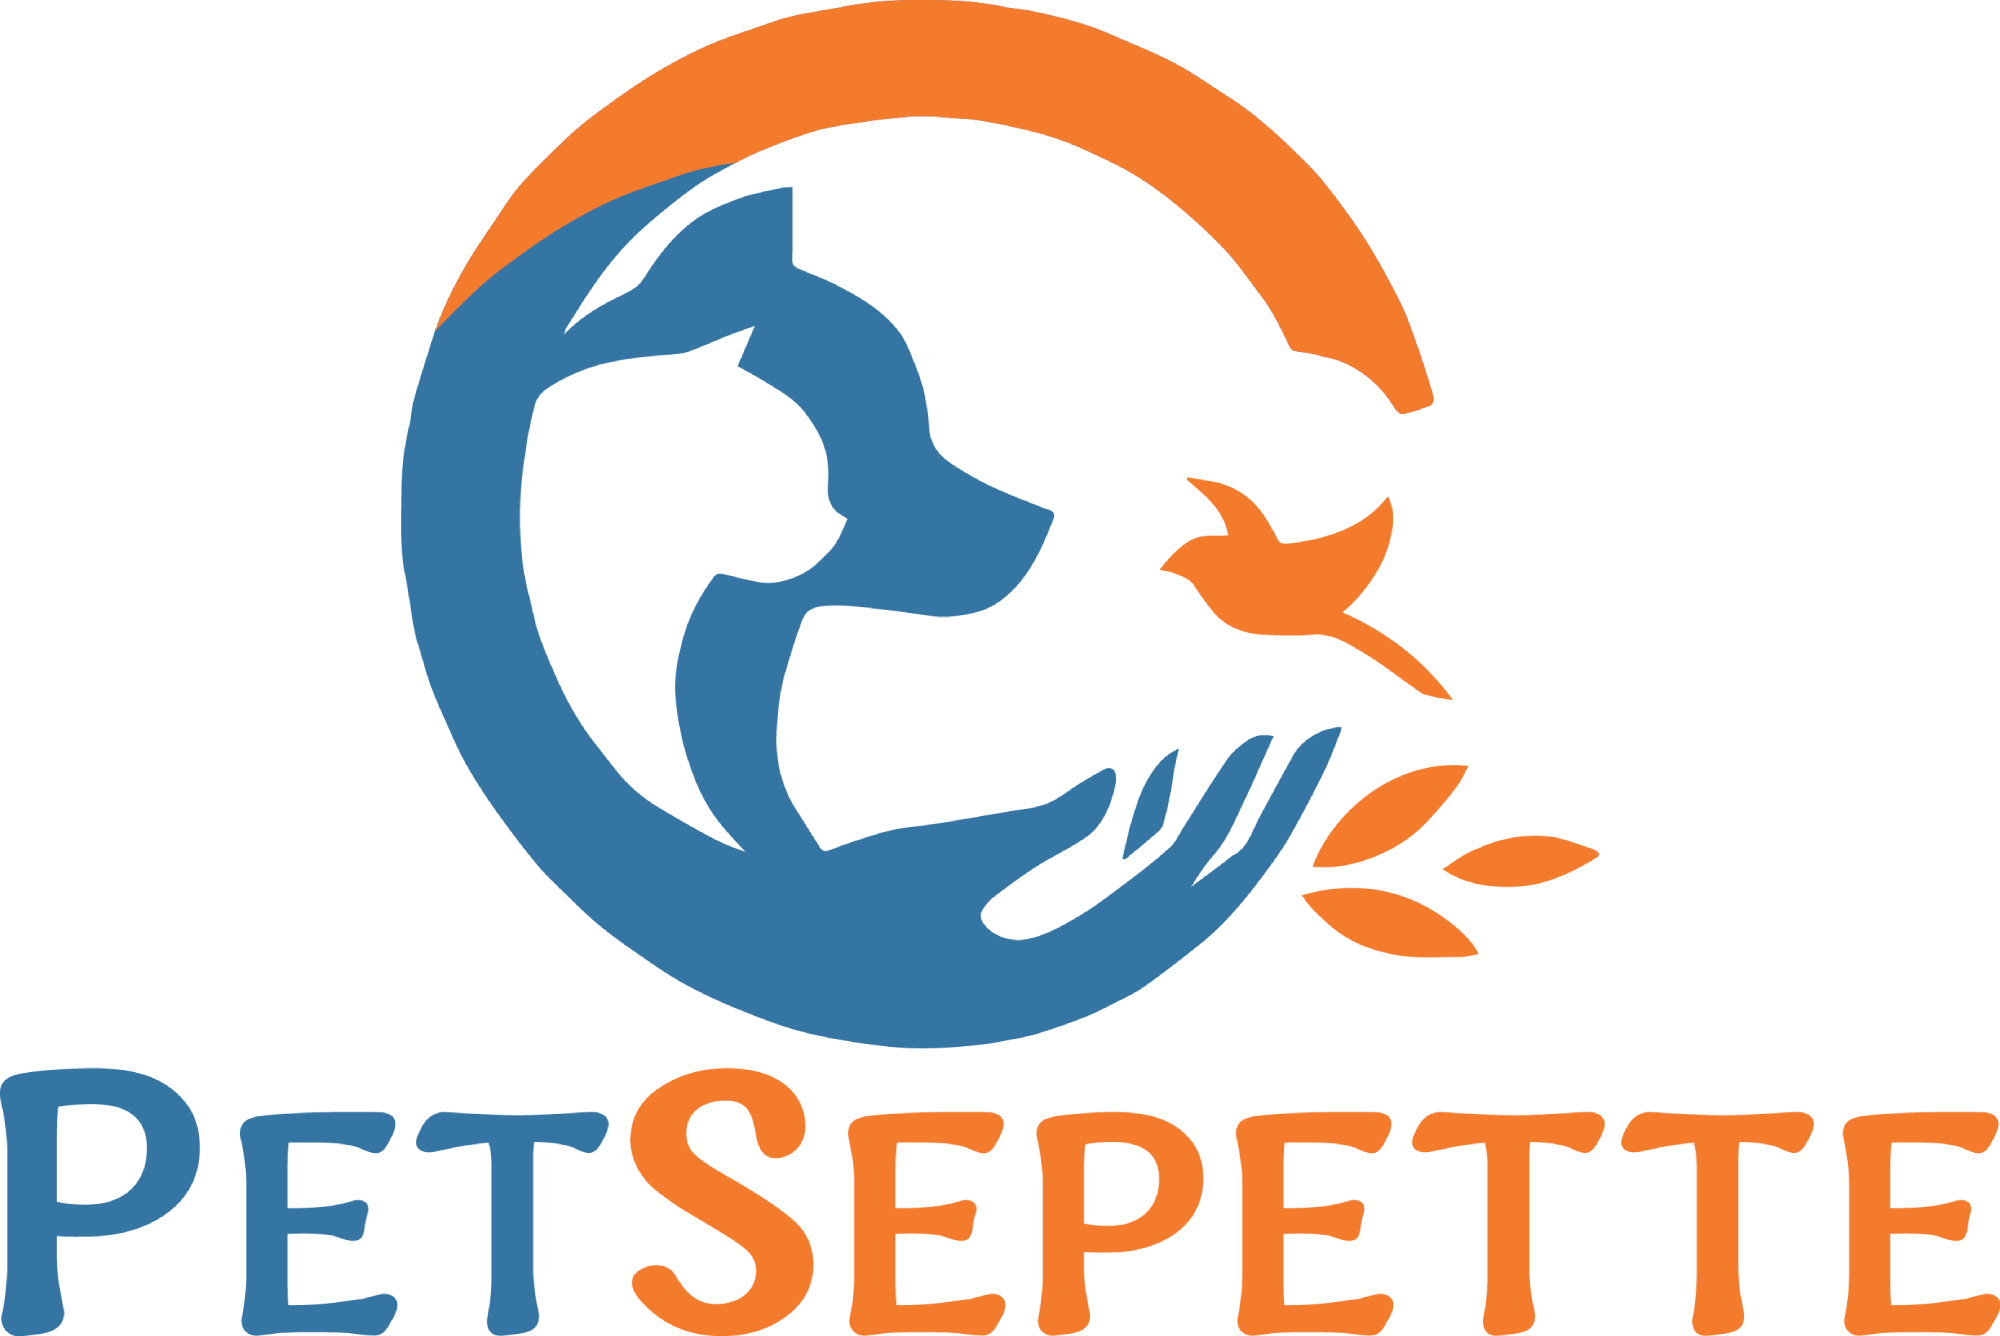 PetSepette Sanal Mağazacılık